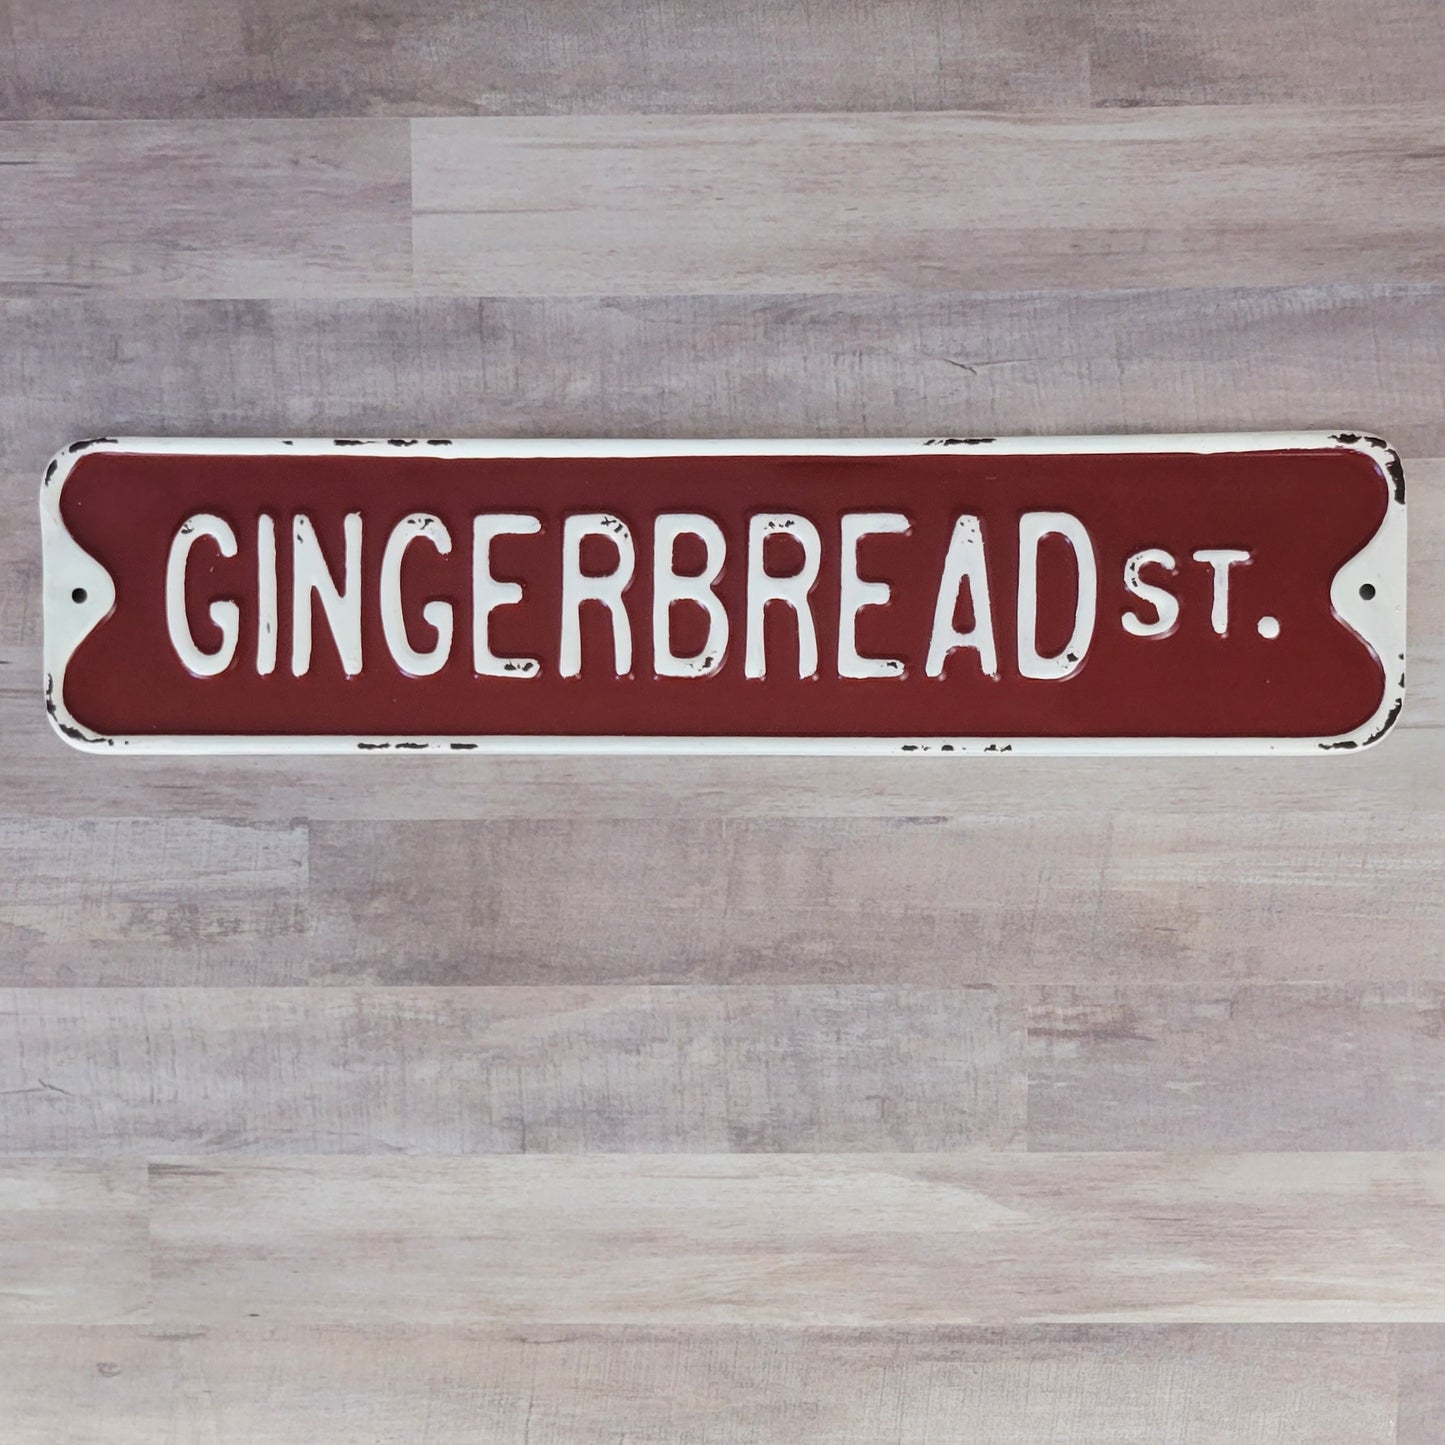 "Gingerbread Street" Street Sign